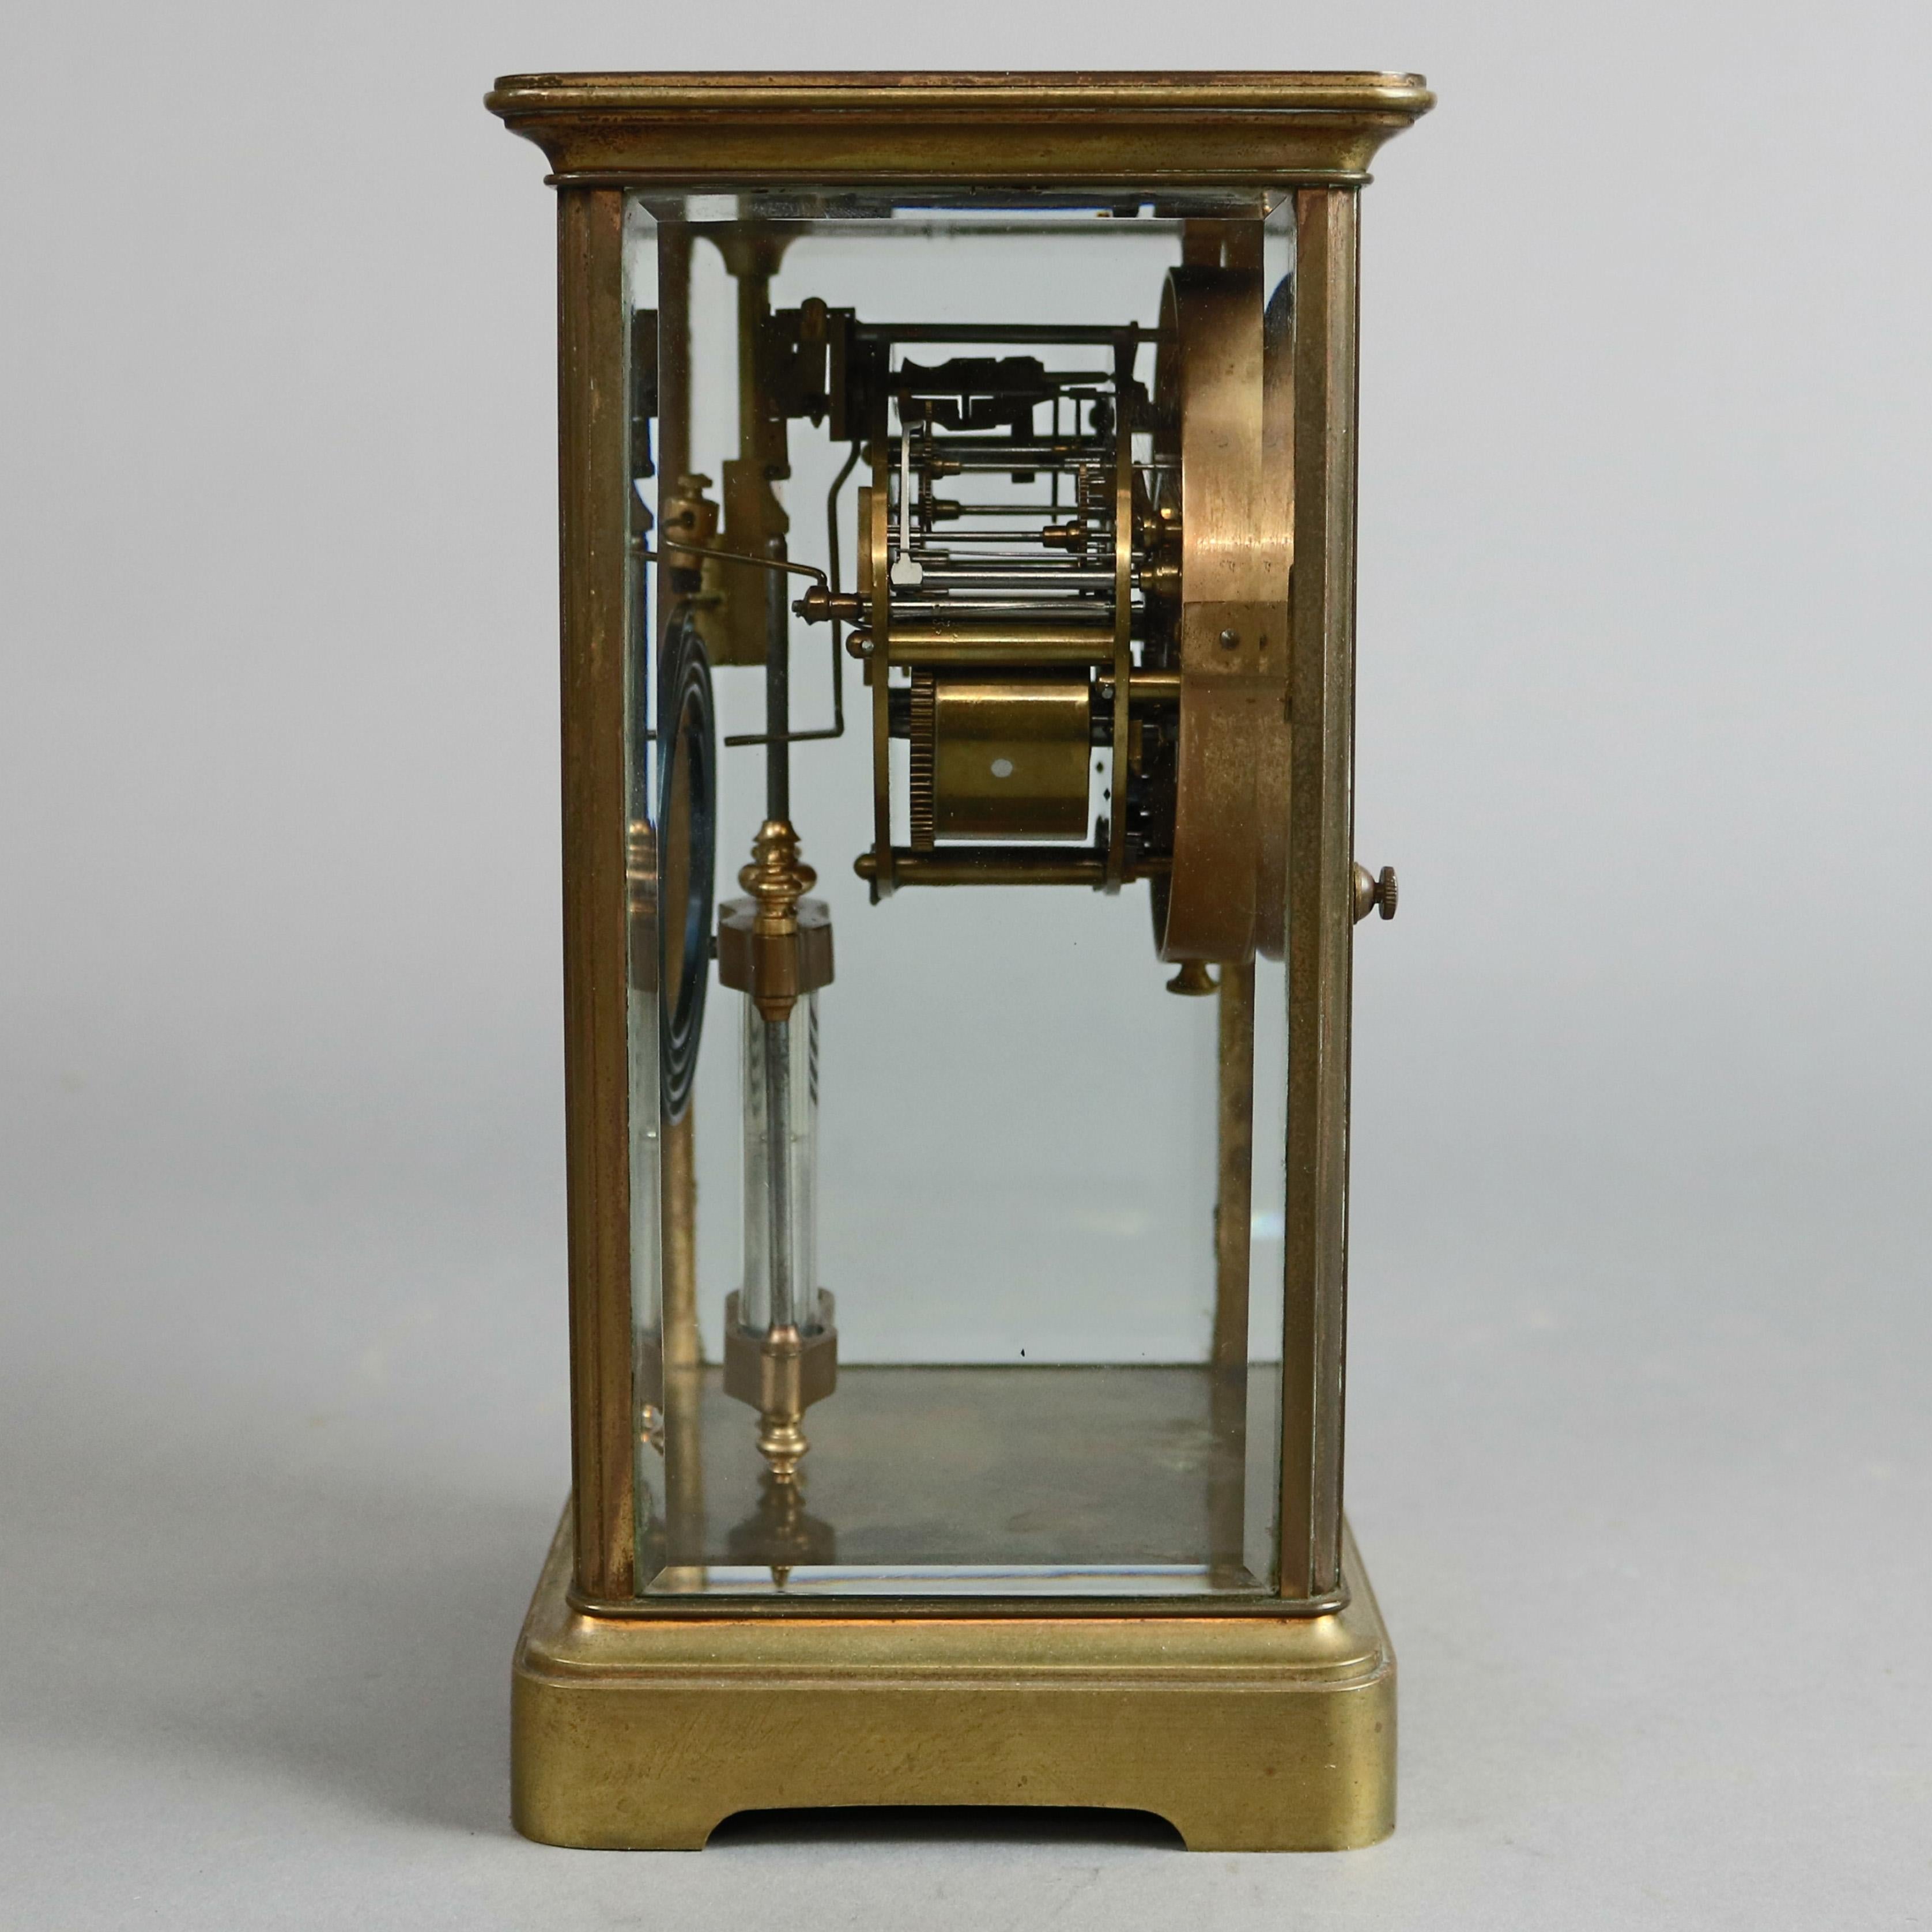 American Antique Tiffany & Co. Crystal and Brass Regulator Mantel Clock, circa 1890